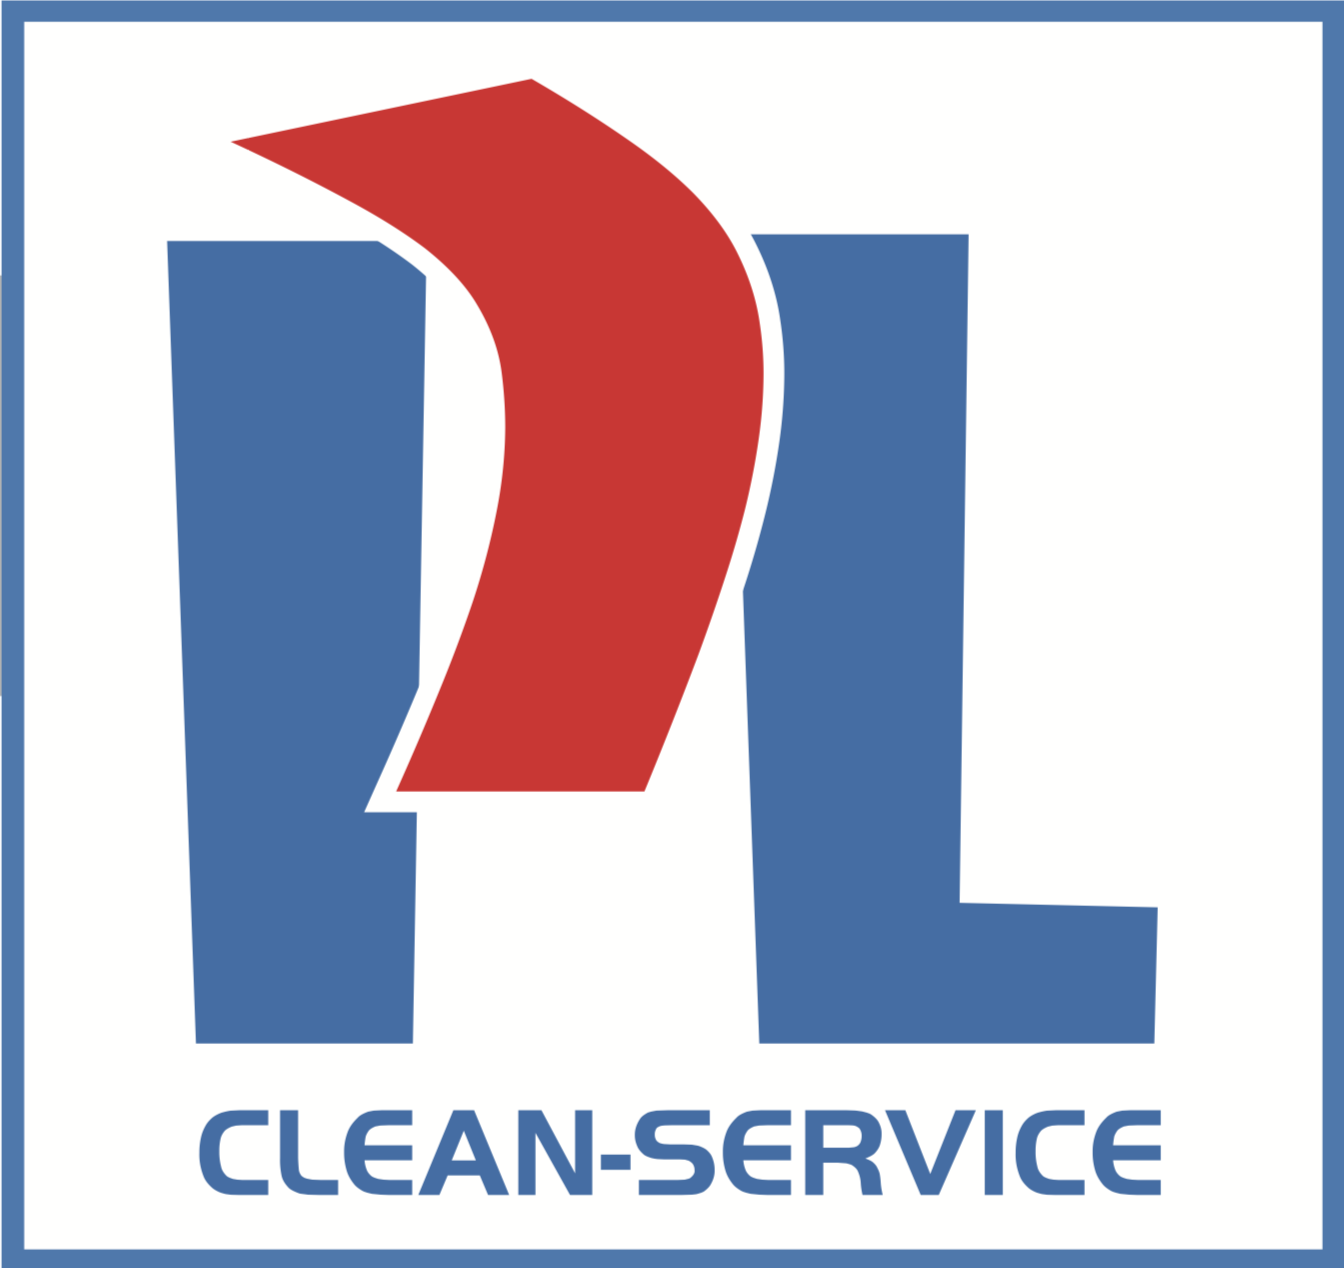 P-L Clean Service GmbH